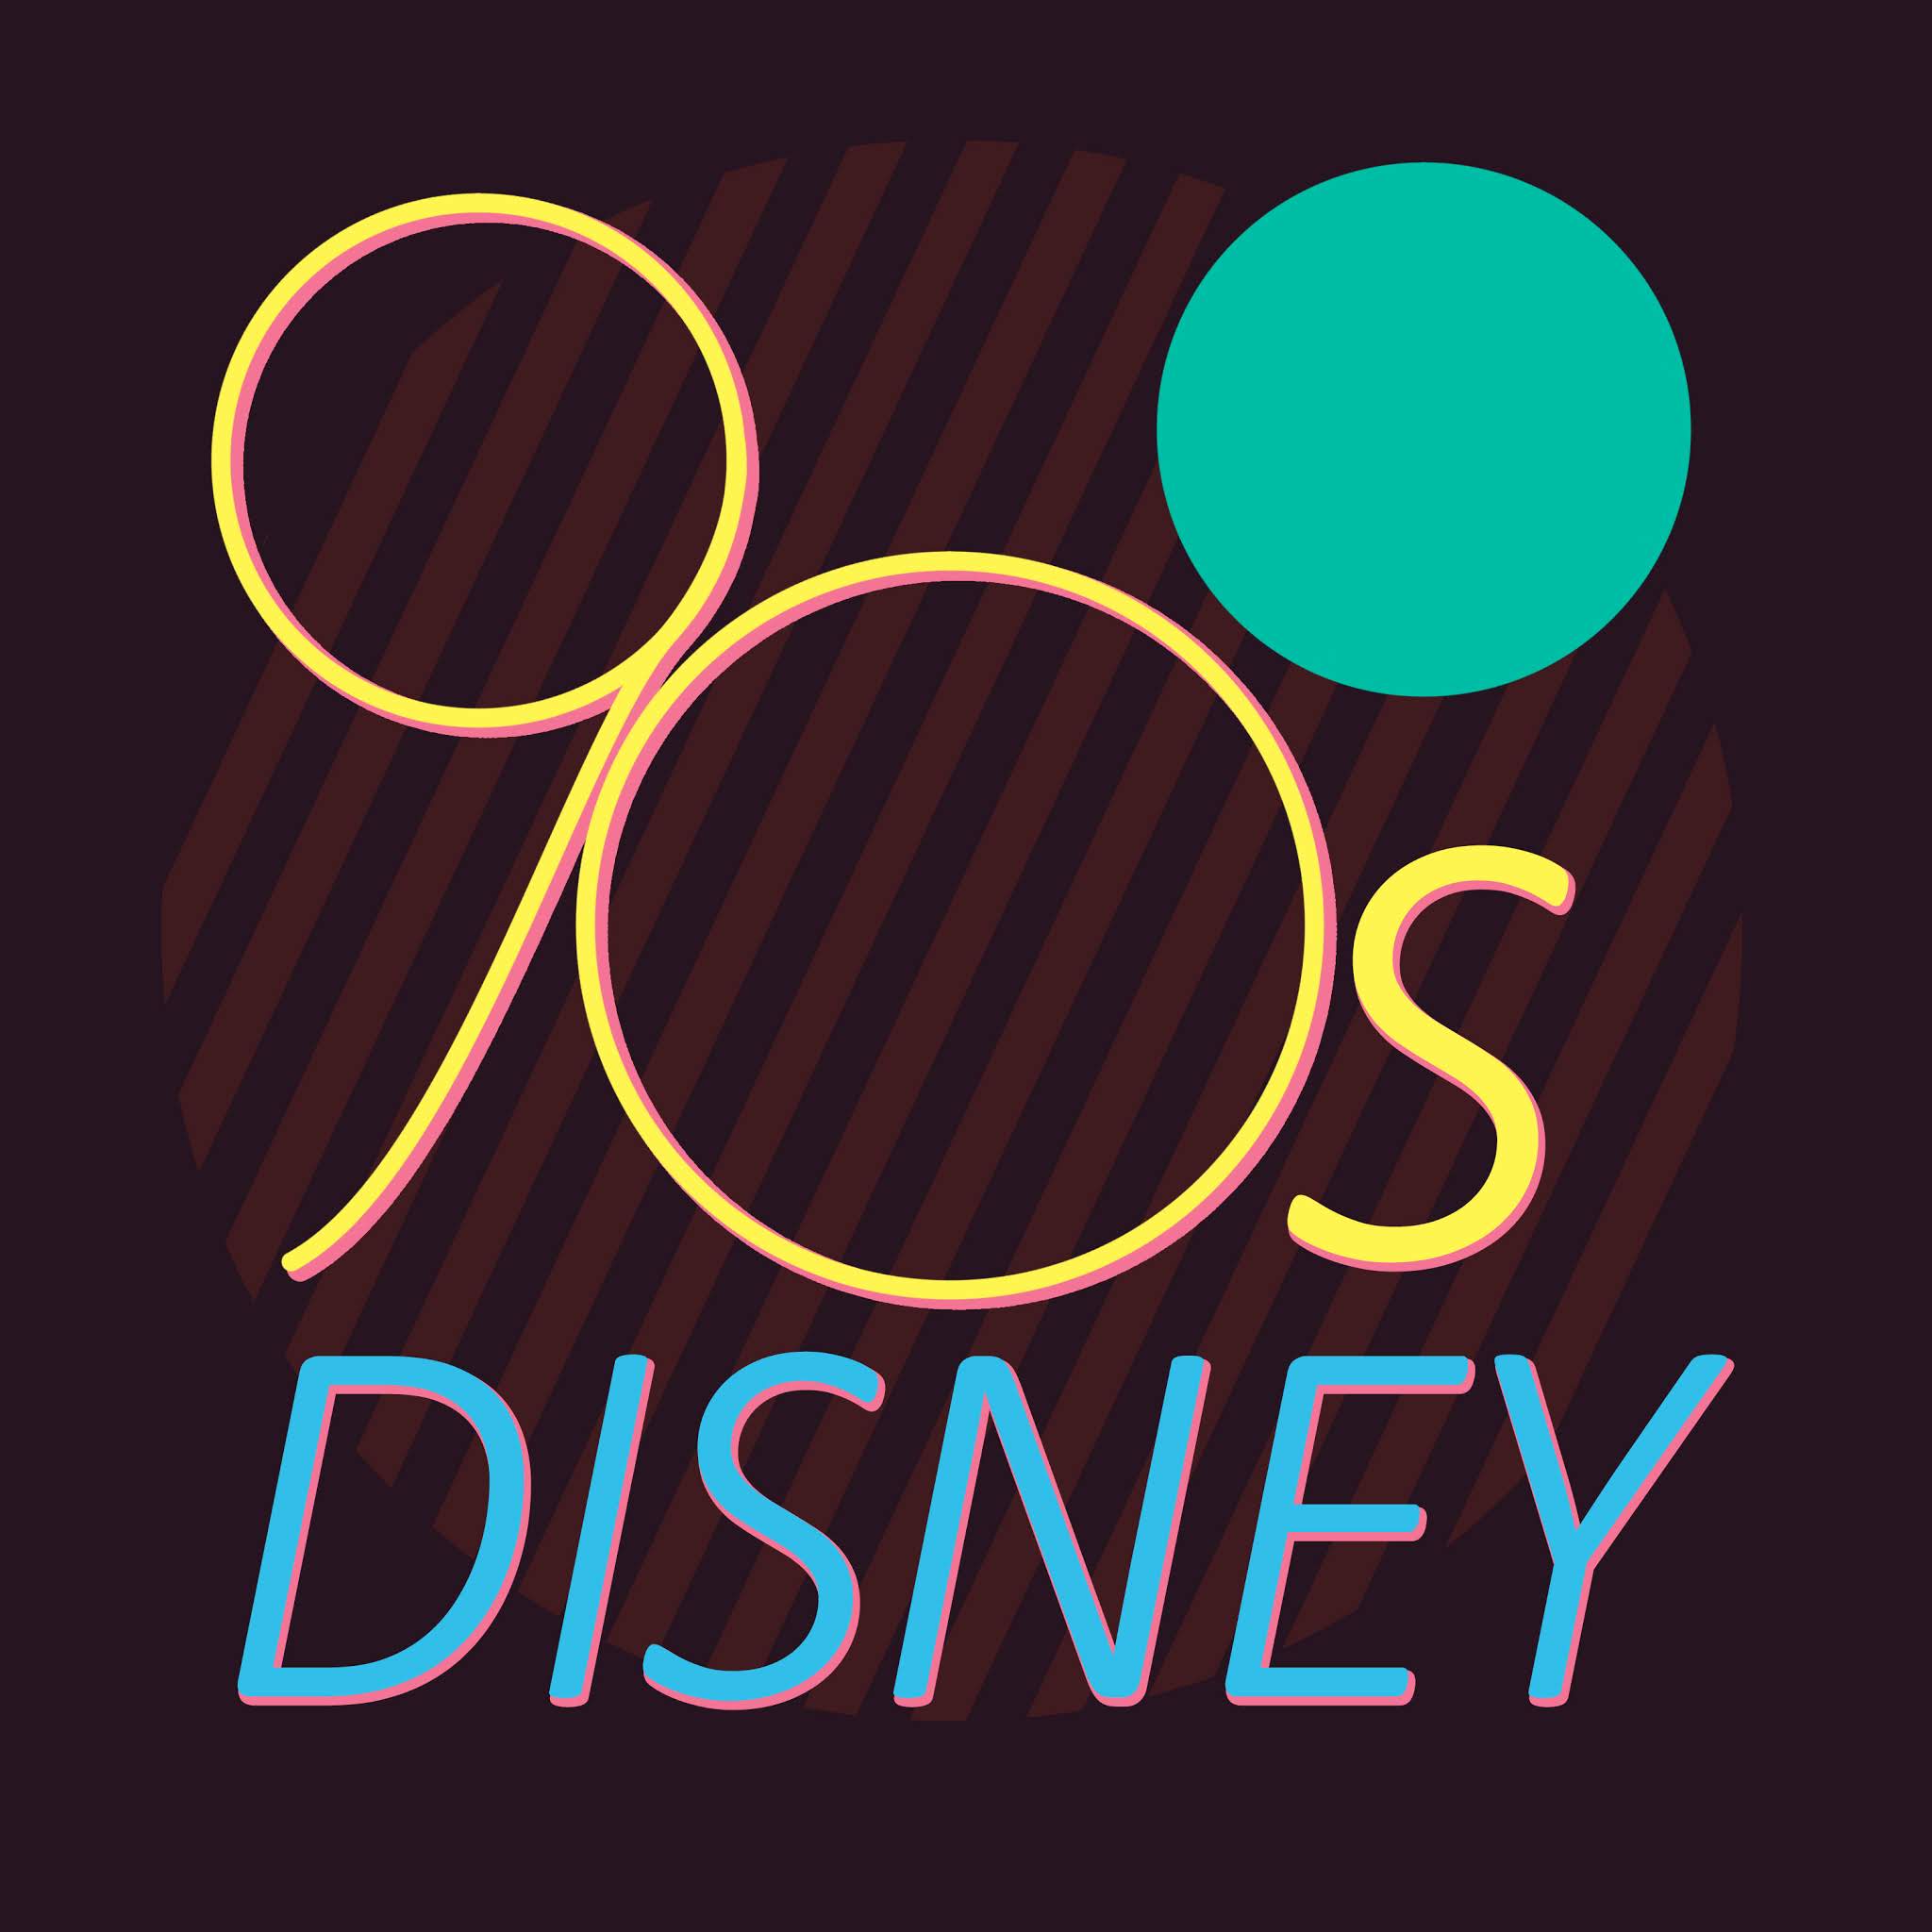 The 90s Disney Logo